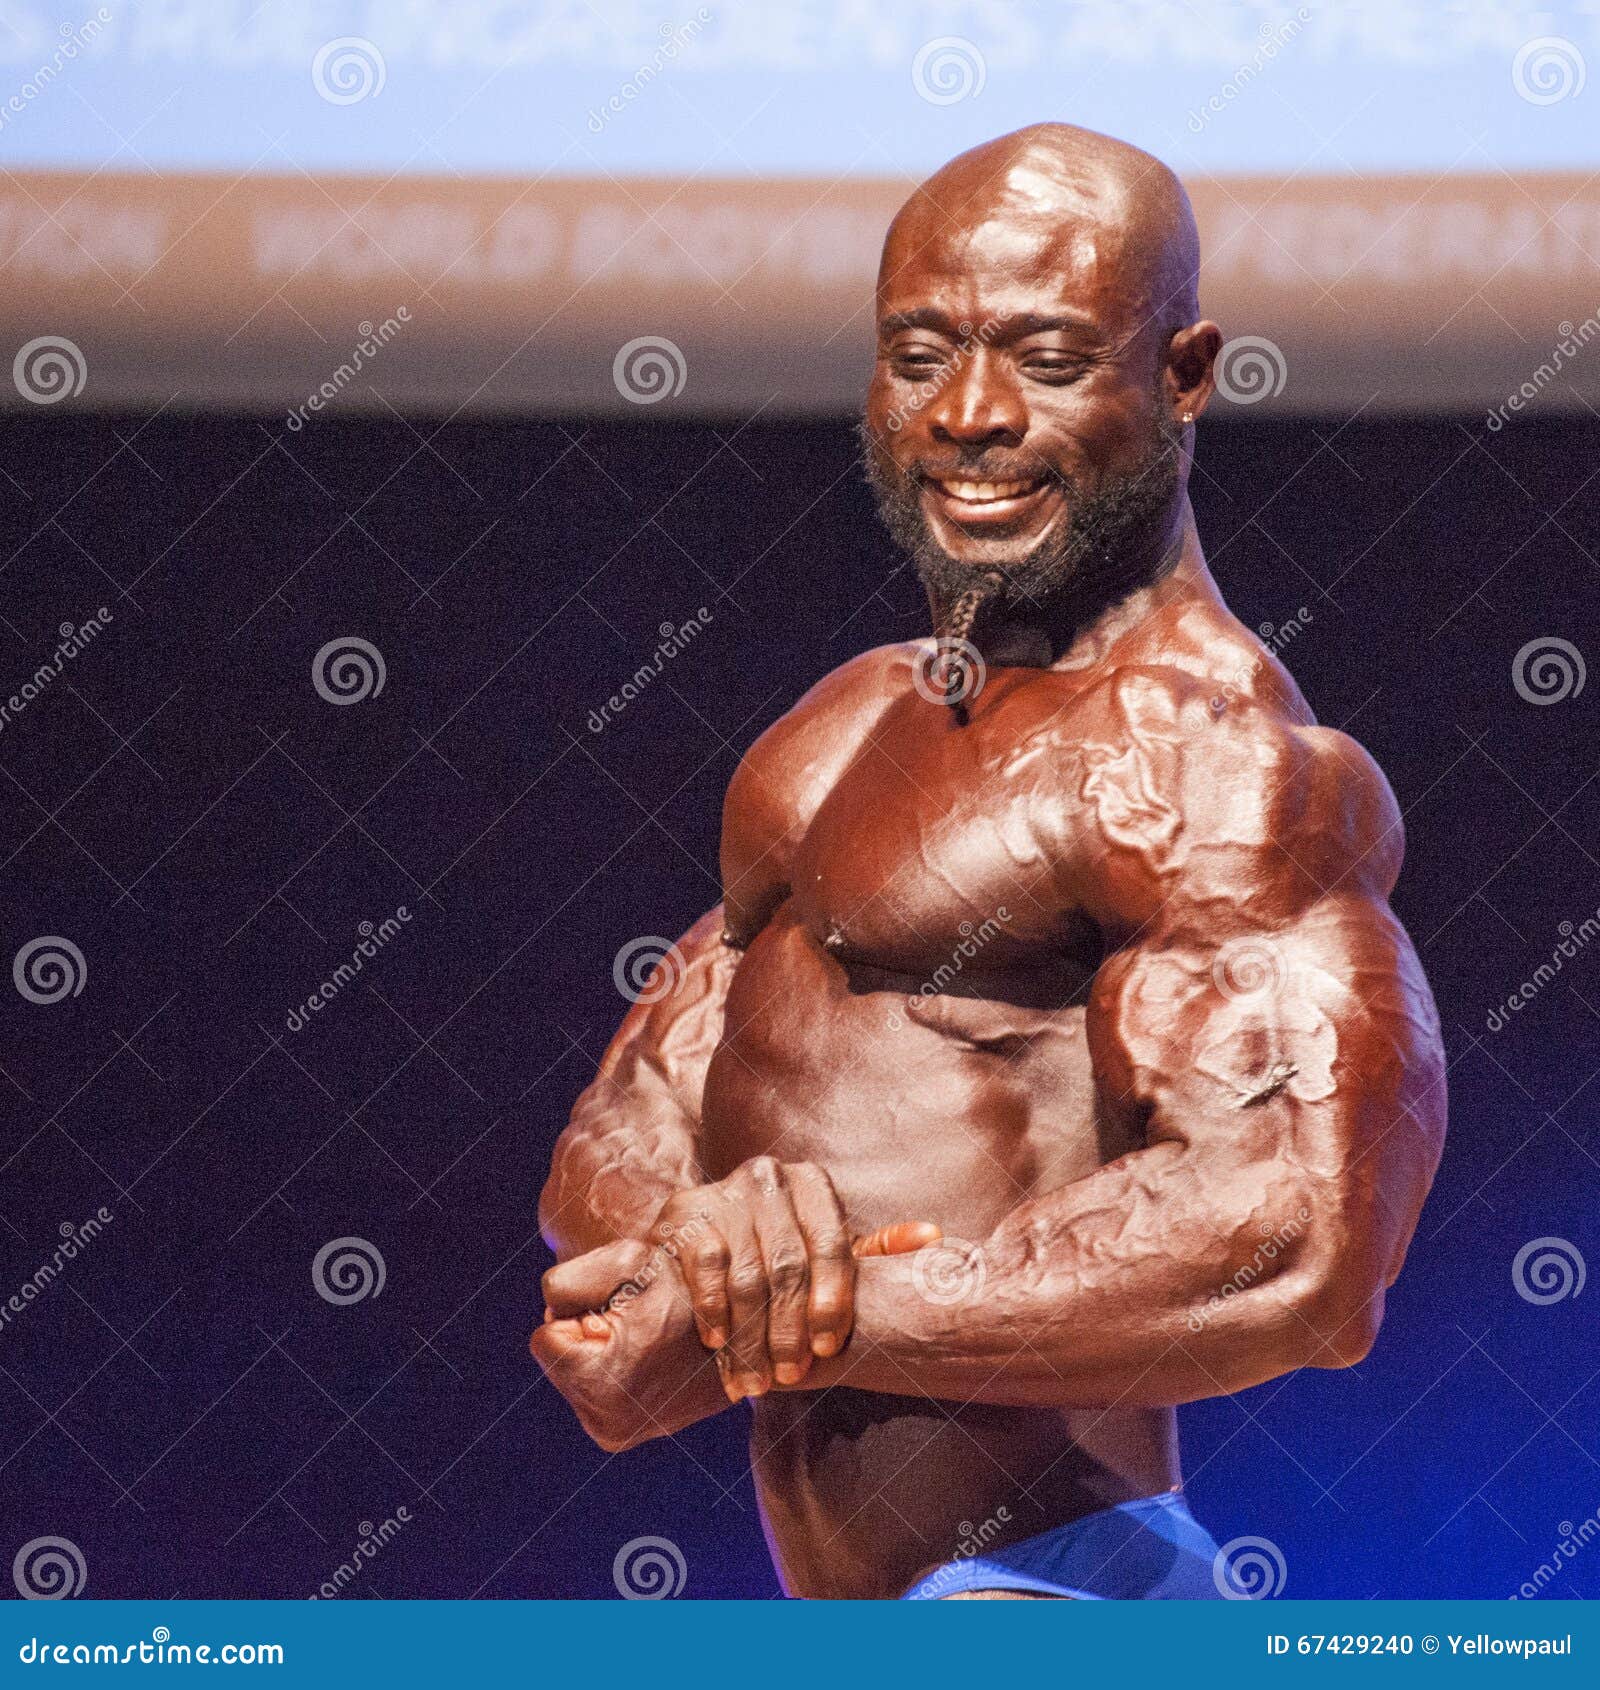 Bodybuilder side chest pose Stock Photo | Adobe Stock